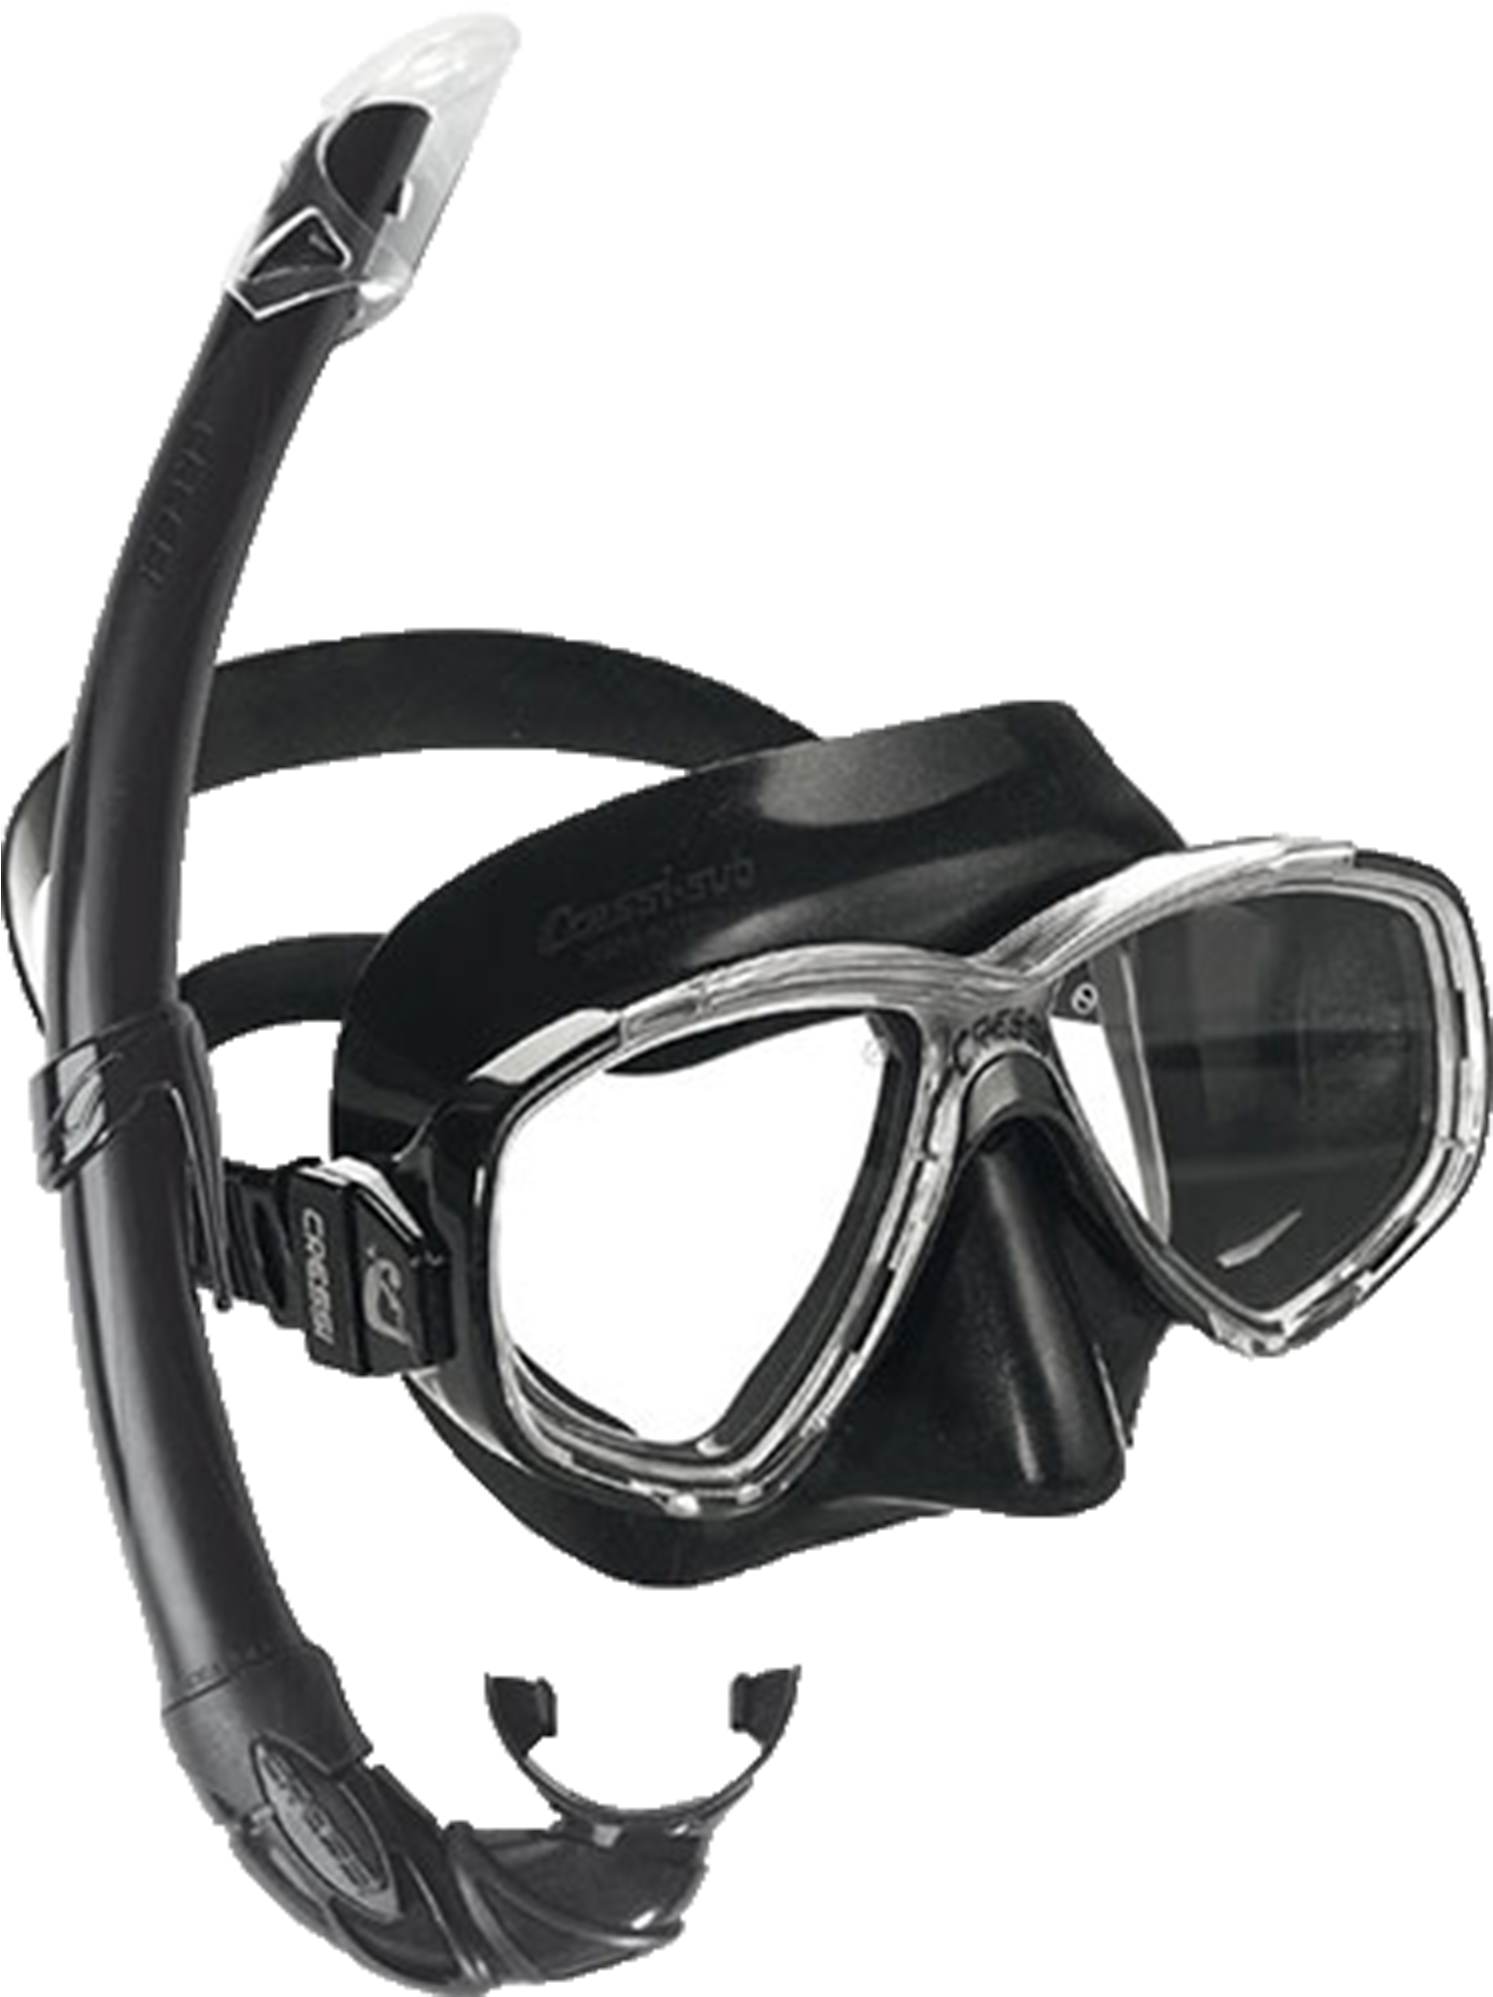 A Black Scuba Mask And Snorkel